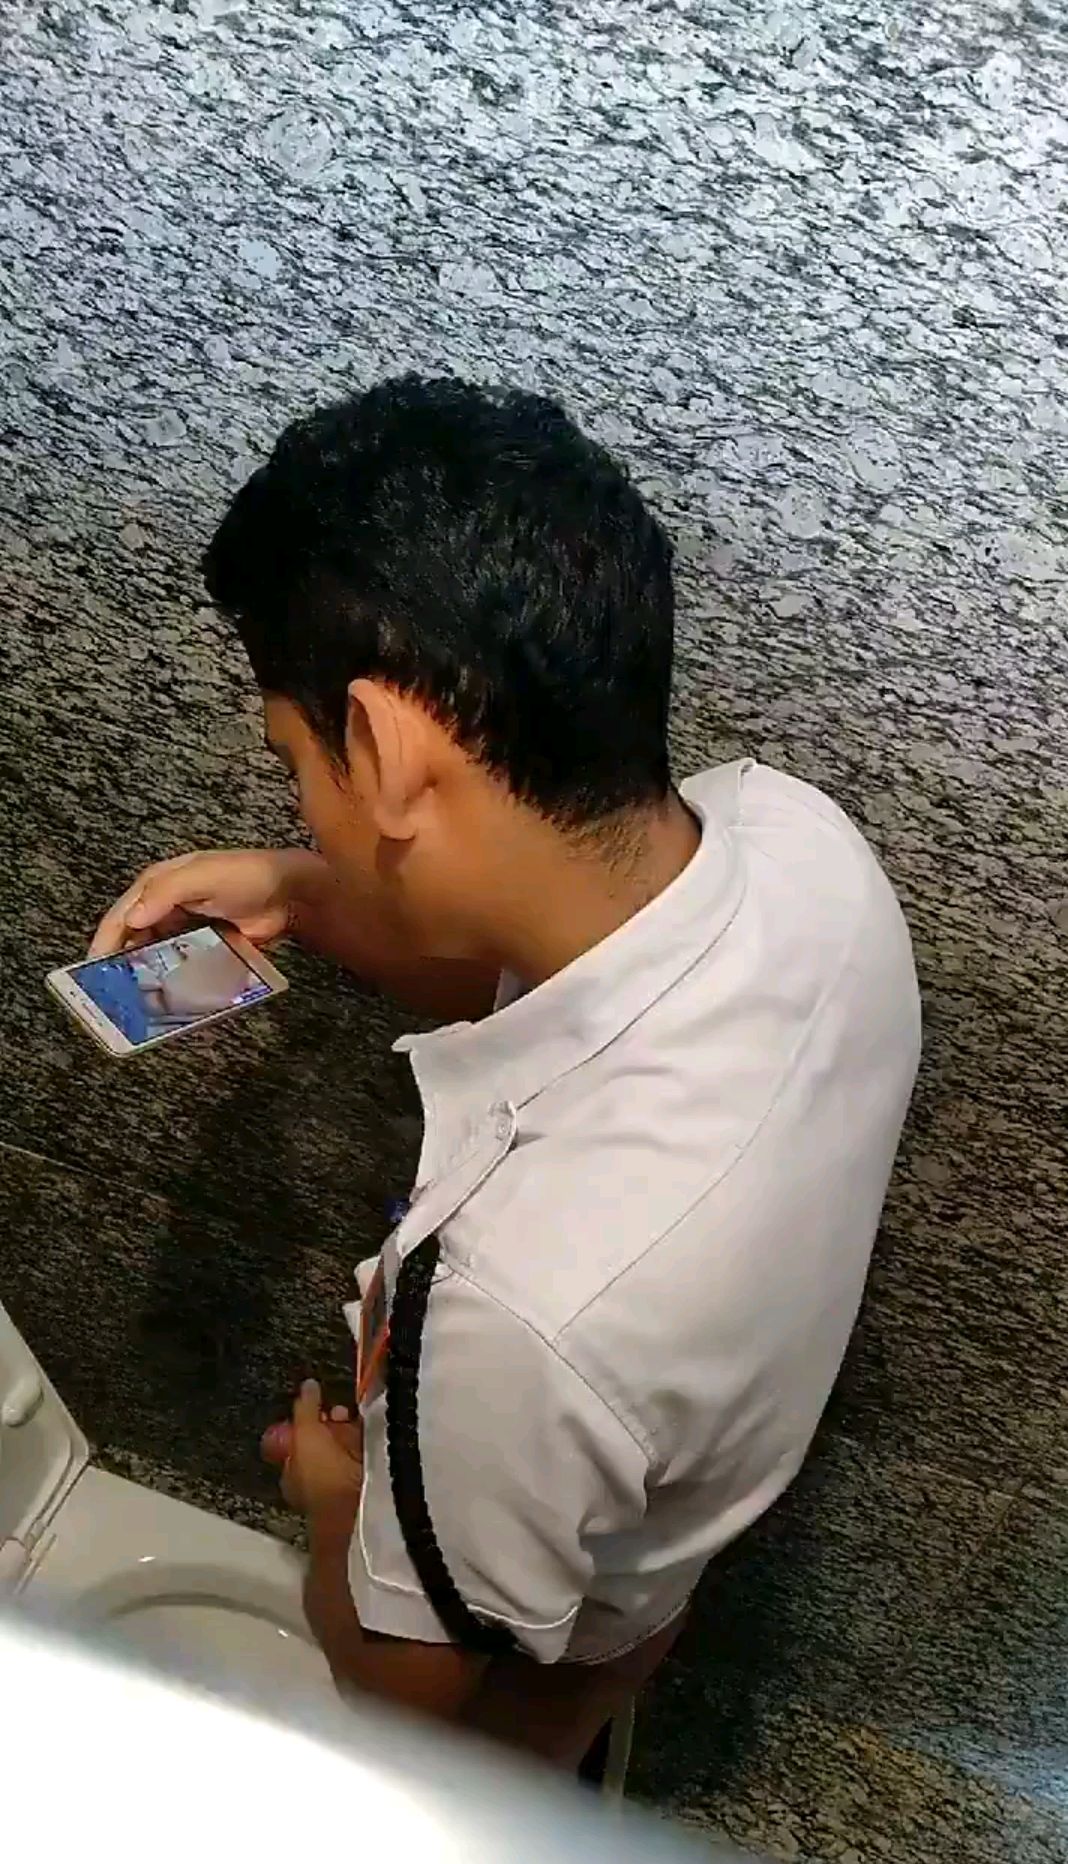 Myanmar Security Guy Hand Play At Toilet